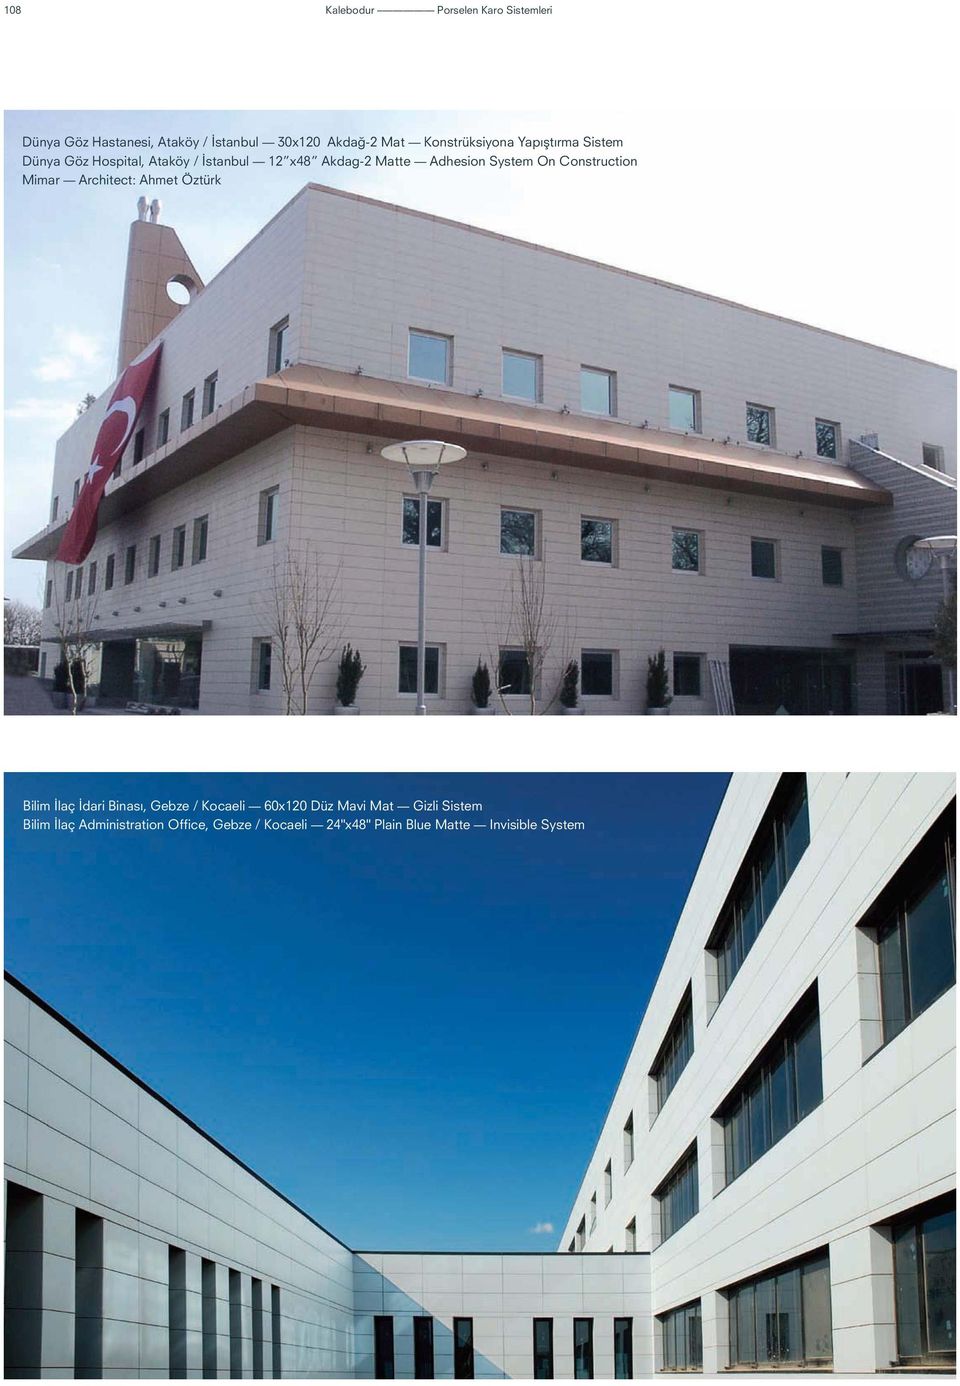 System On Construction Mimar Architect: Ahmet Öztürk Bilim İlaç İdari Binası, Gebze / Kocaeli 60x120